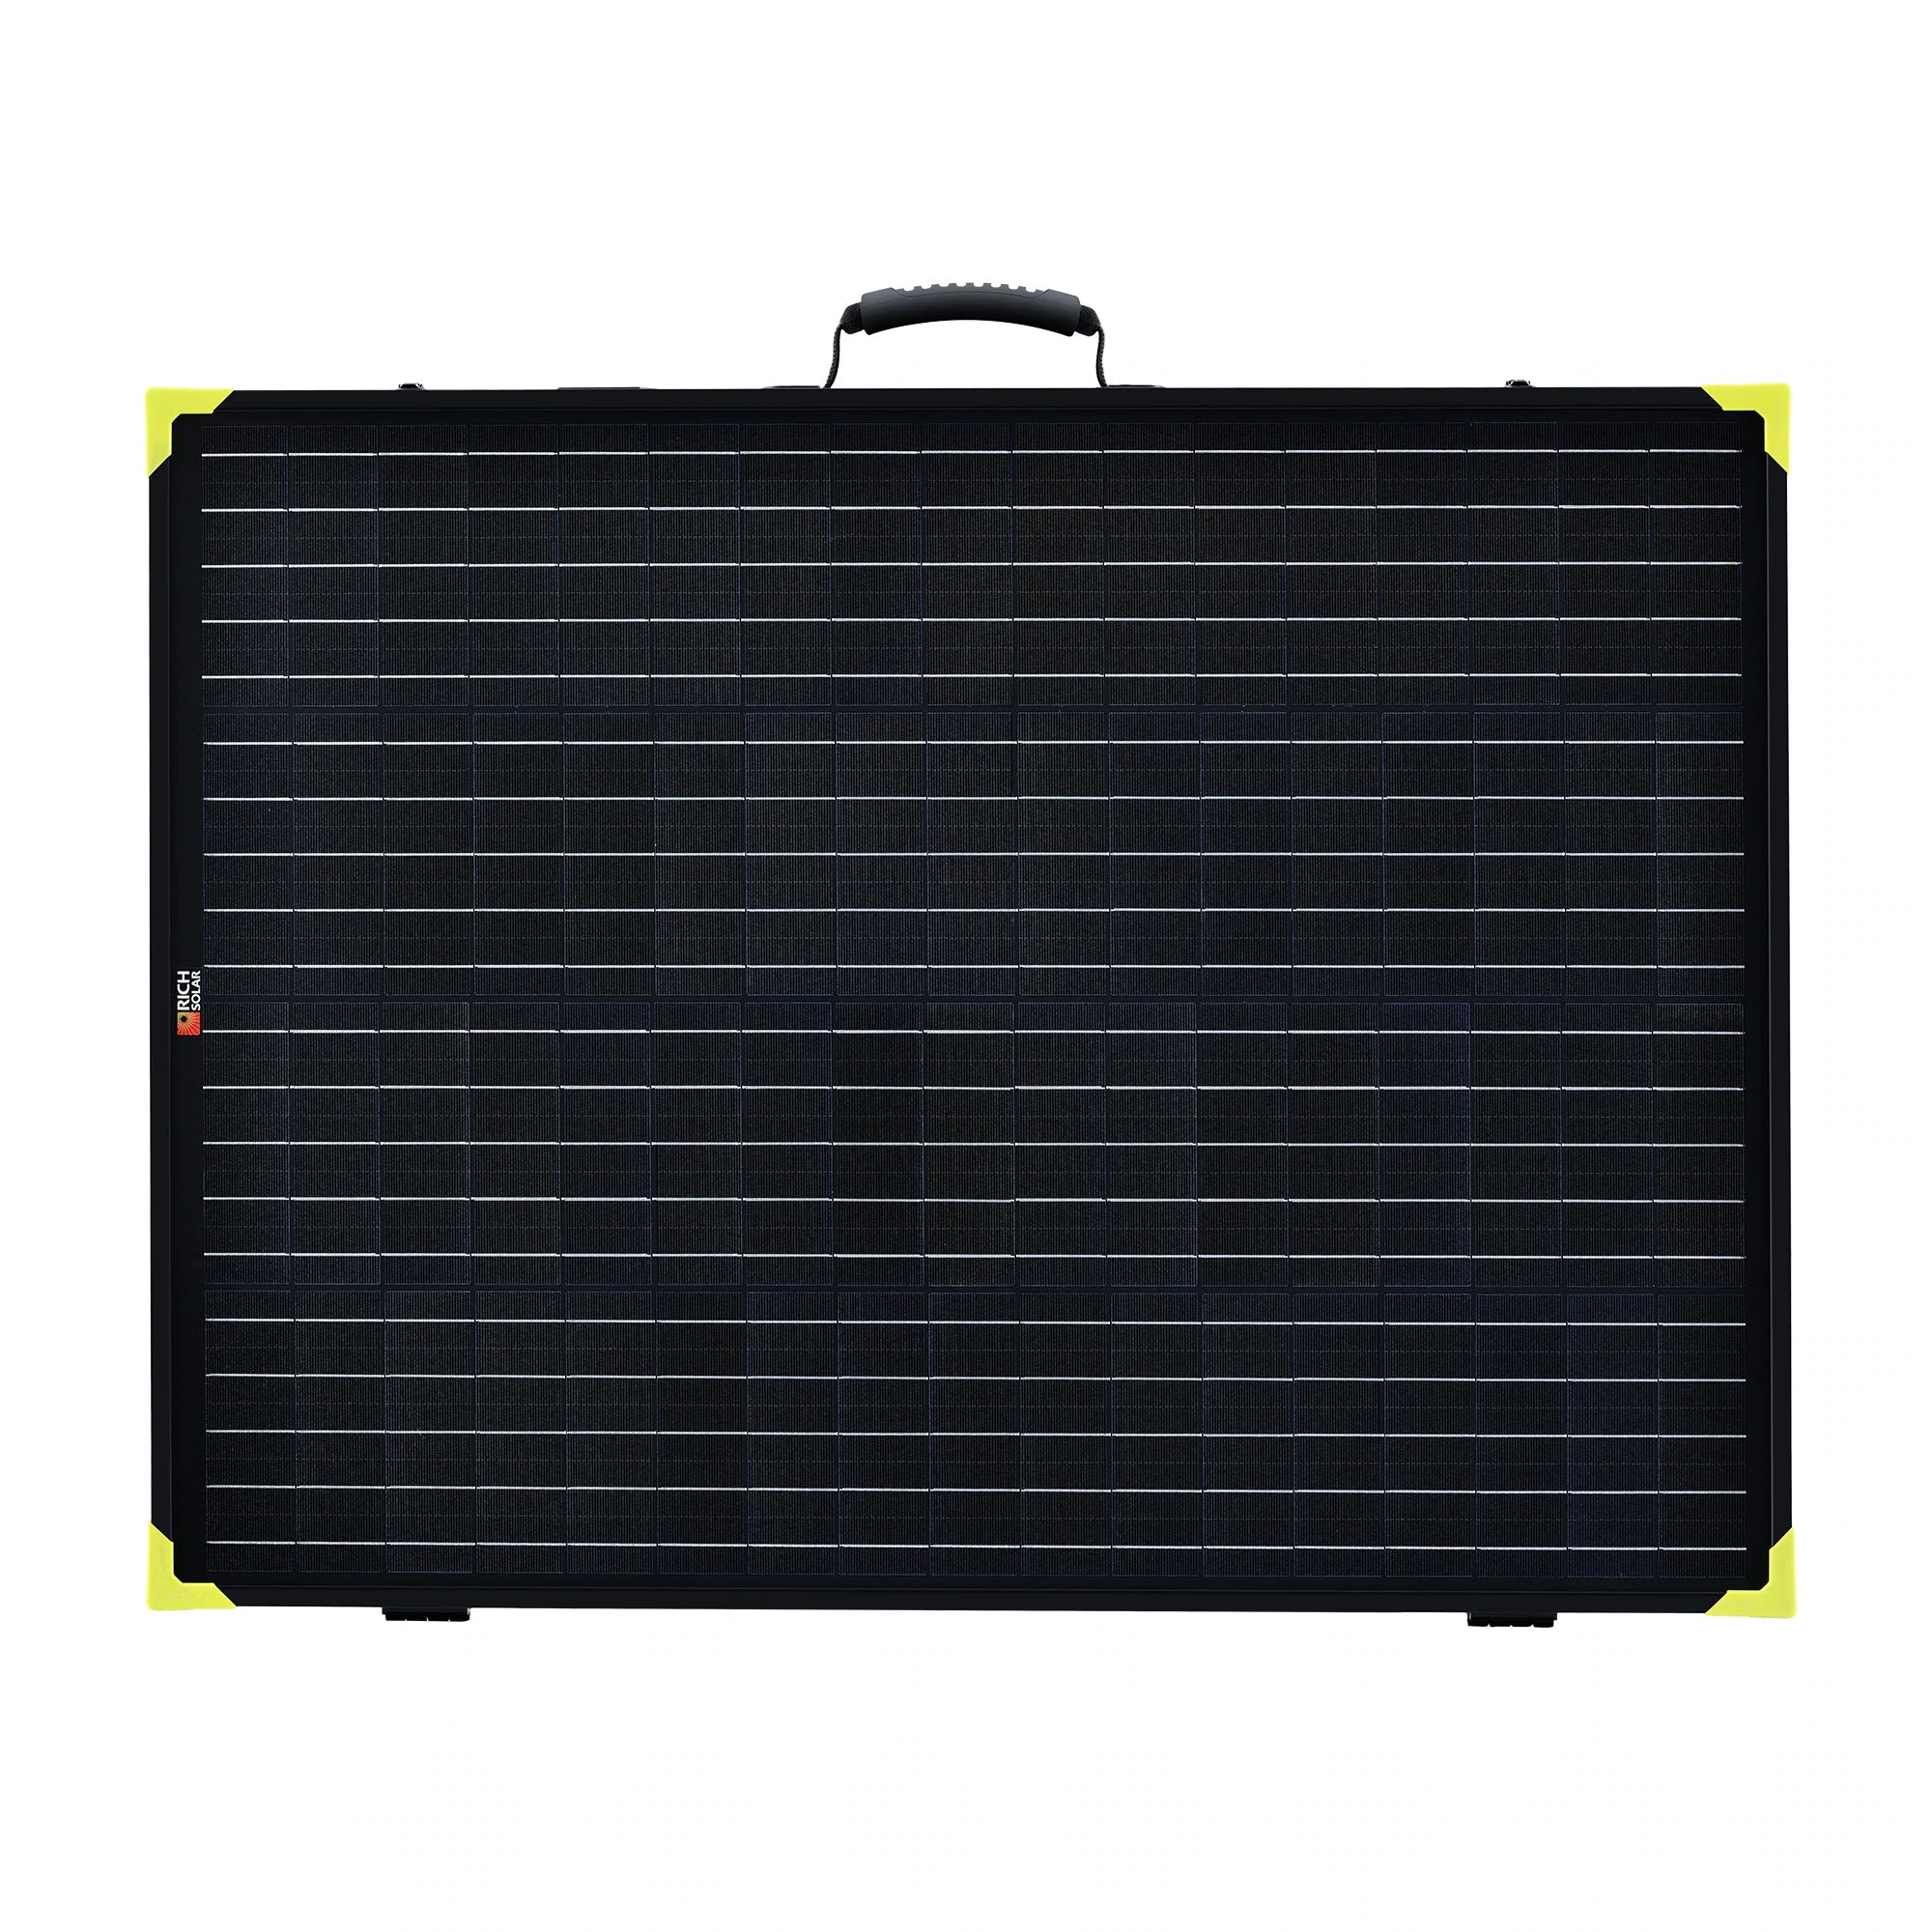 Rich Solar MEGA 200 Watt Portable Solar Panel Briefcase